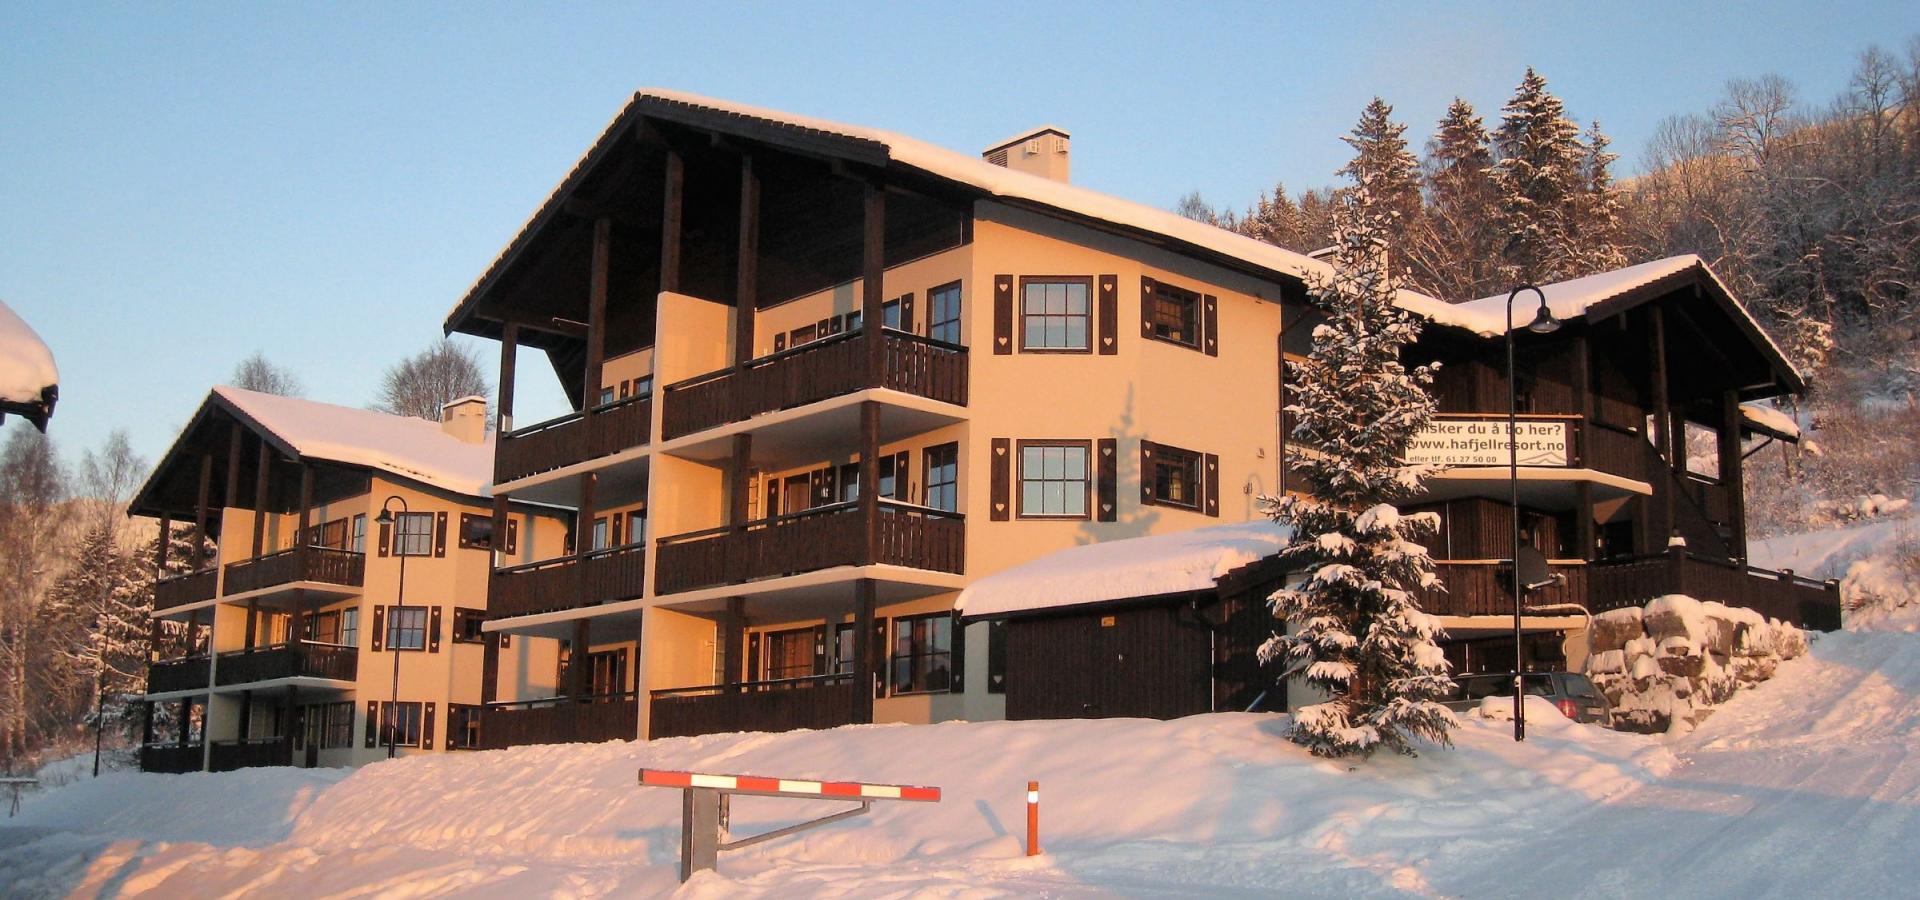 Sørlia apartments